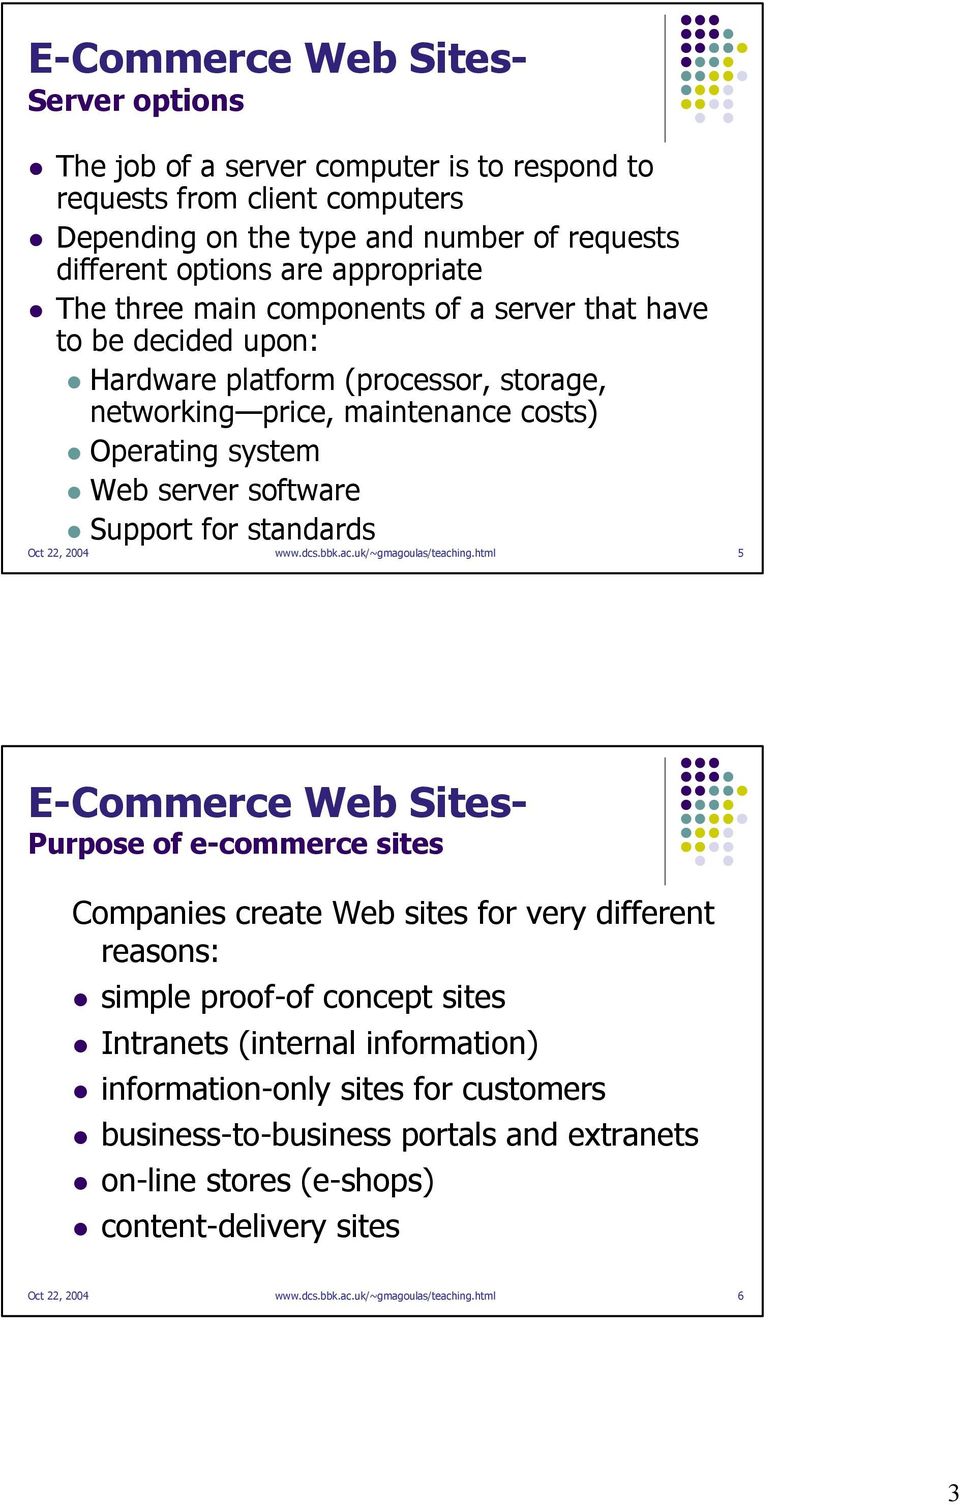 Apache Web Server Administration and e-Commerce Handbook